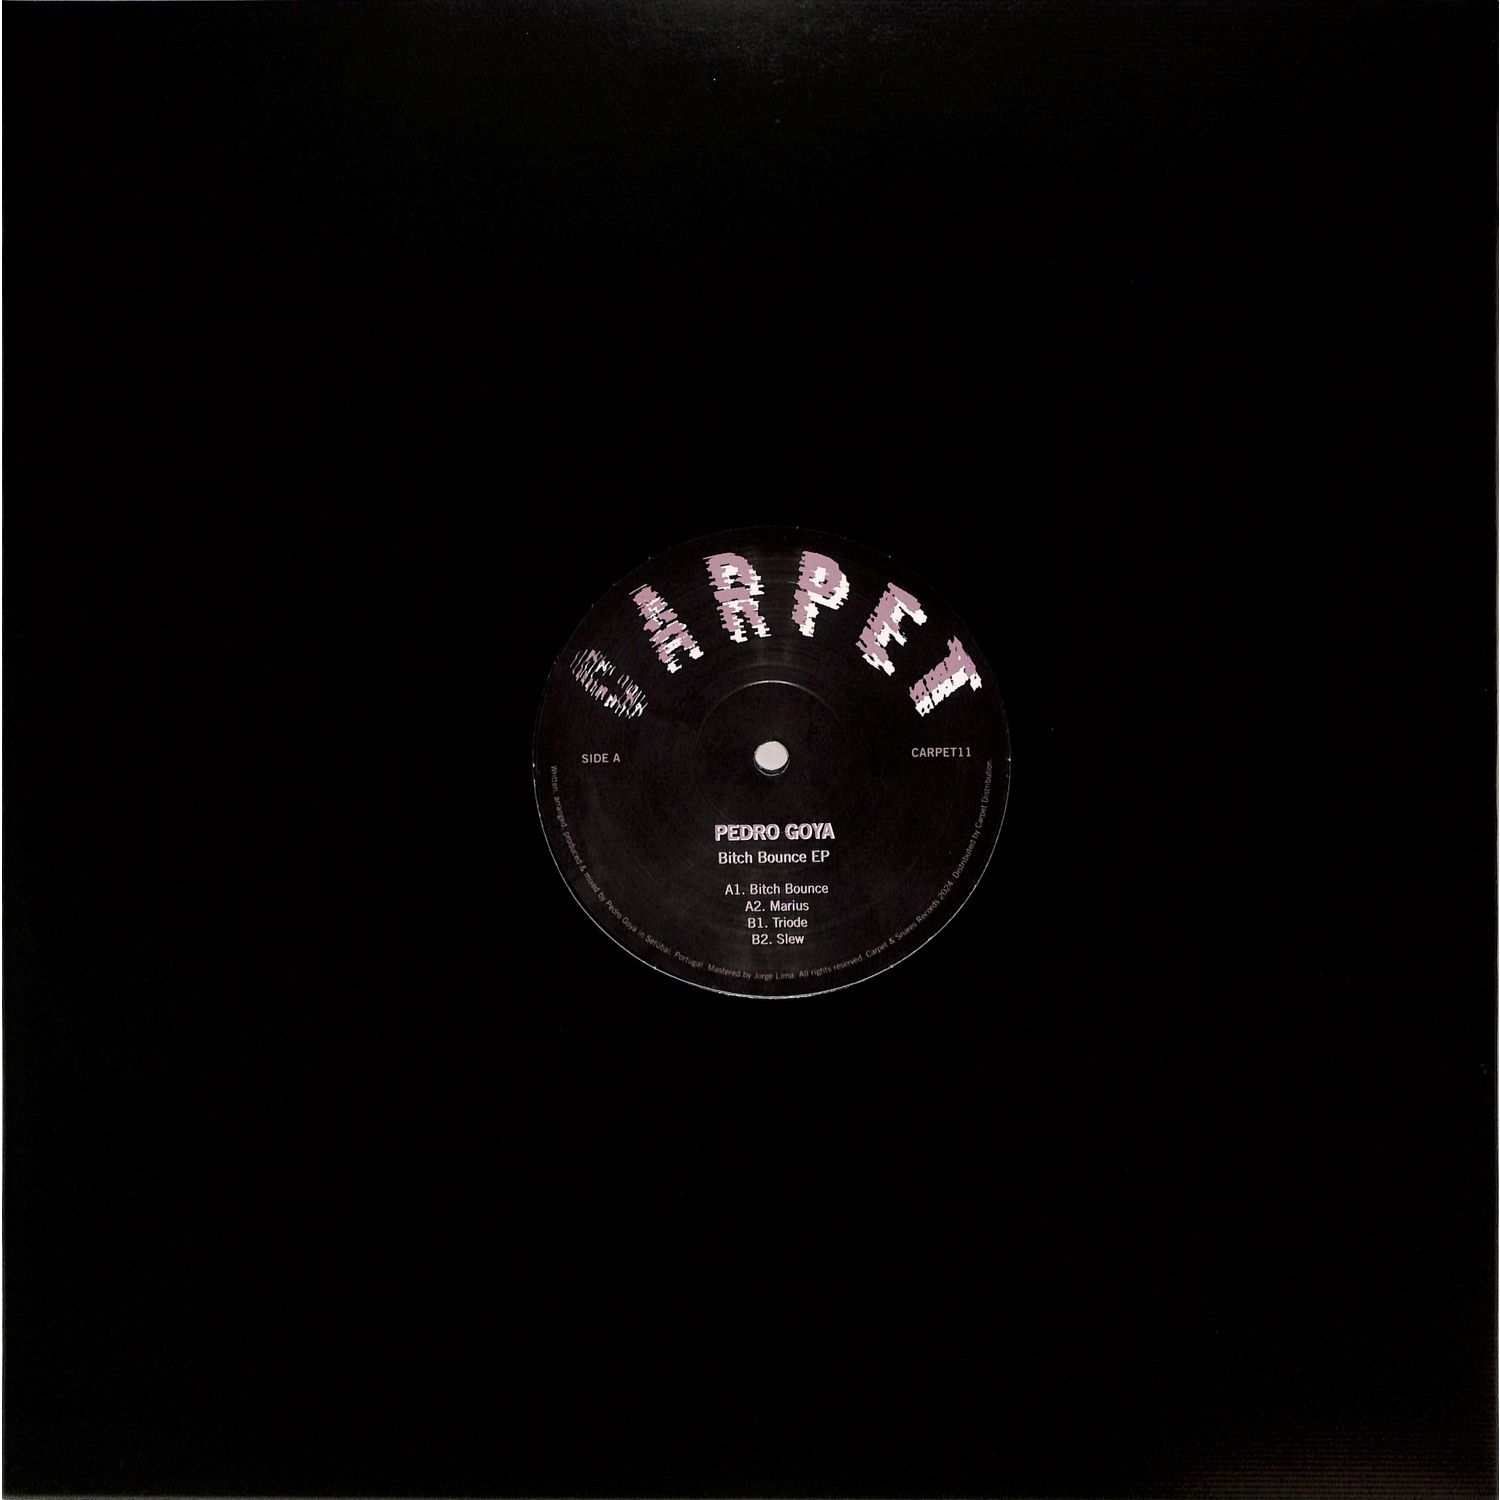 Pedro Goya - BITCH BOUNCE EP